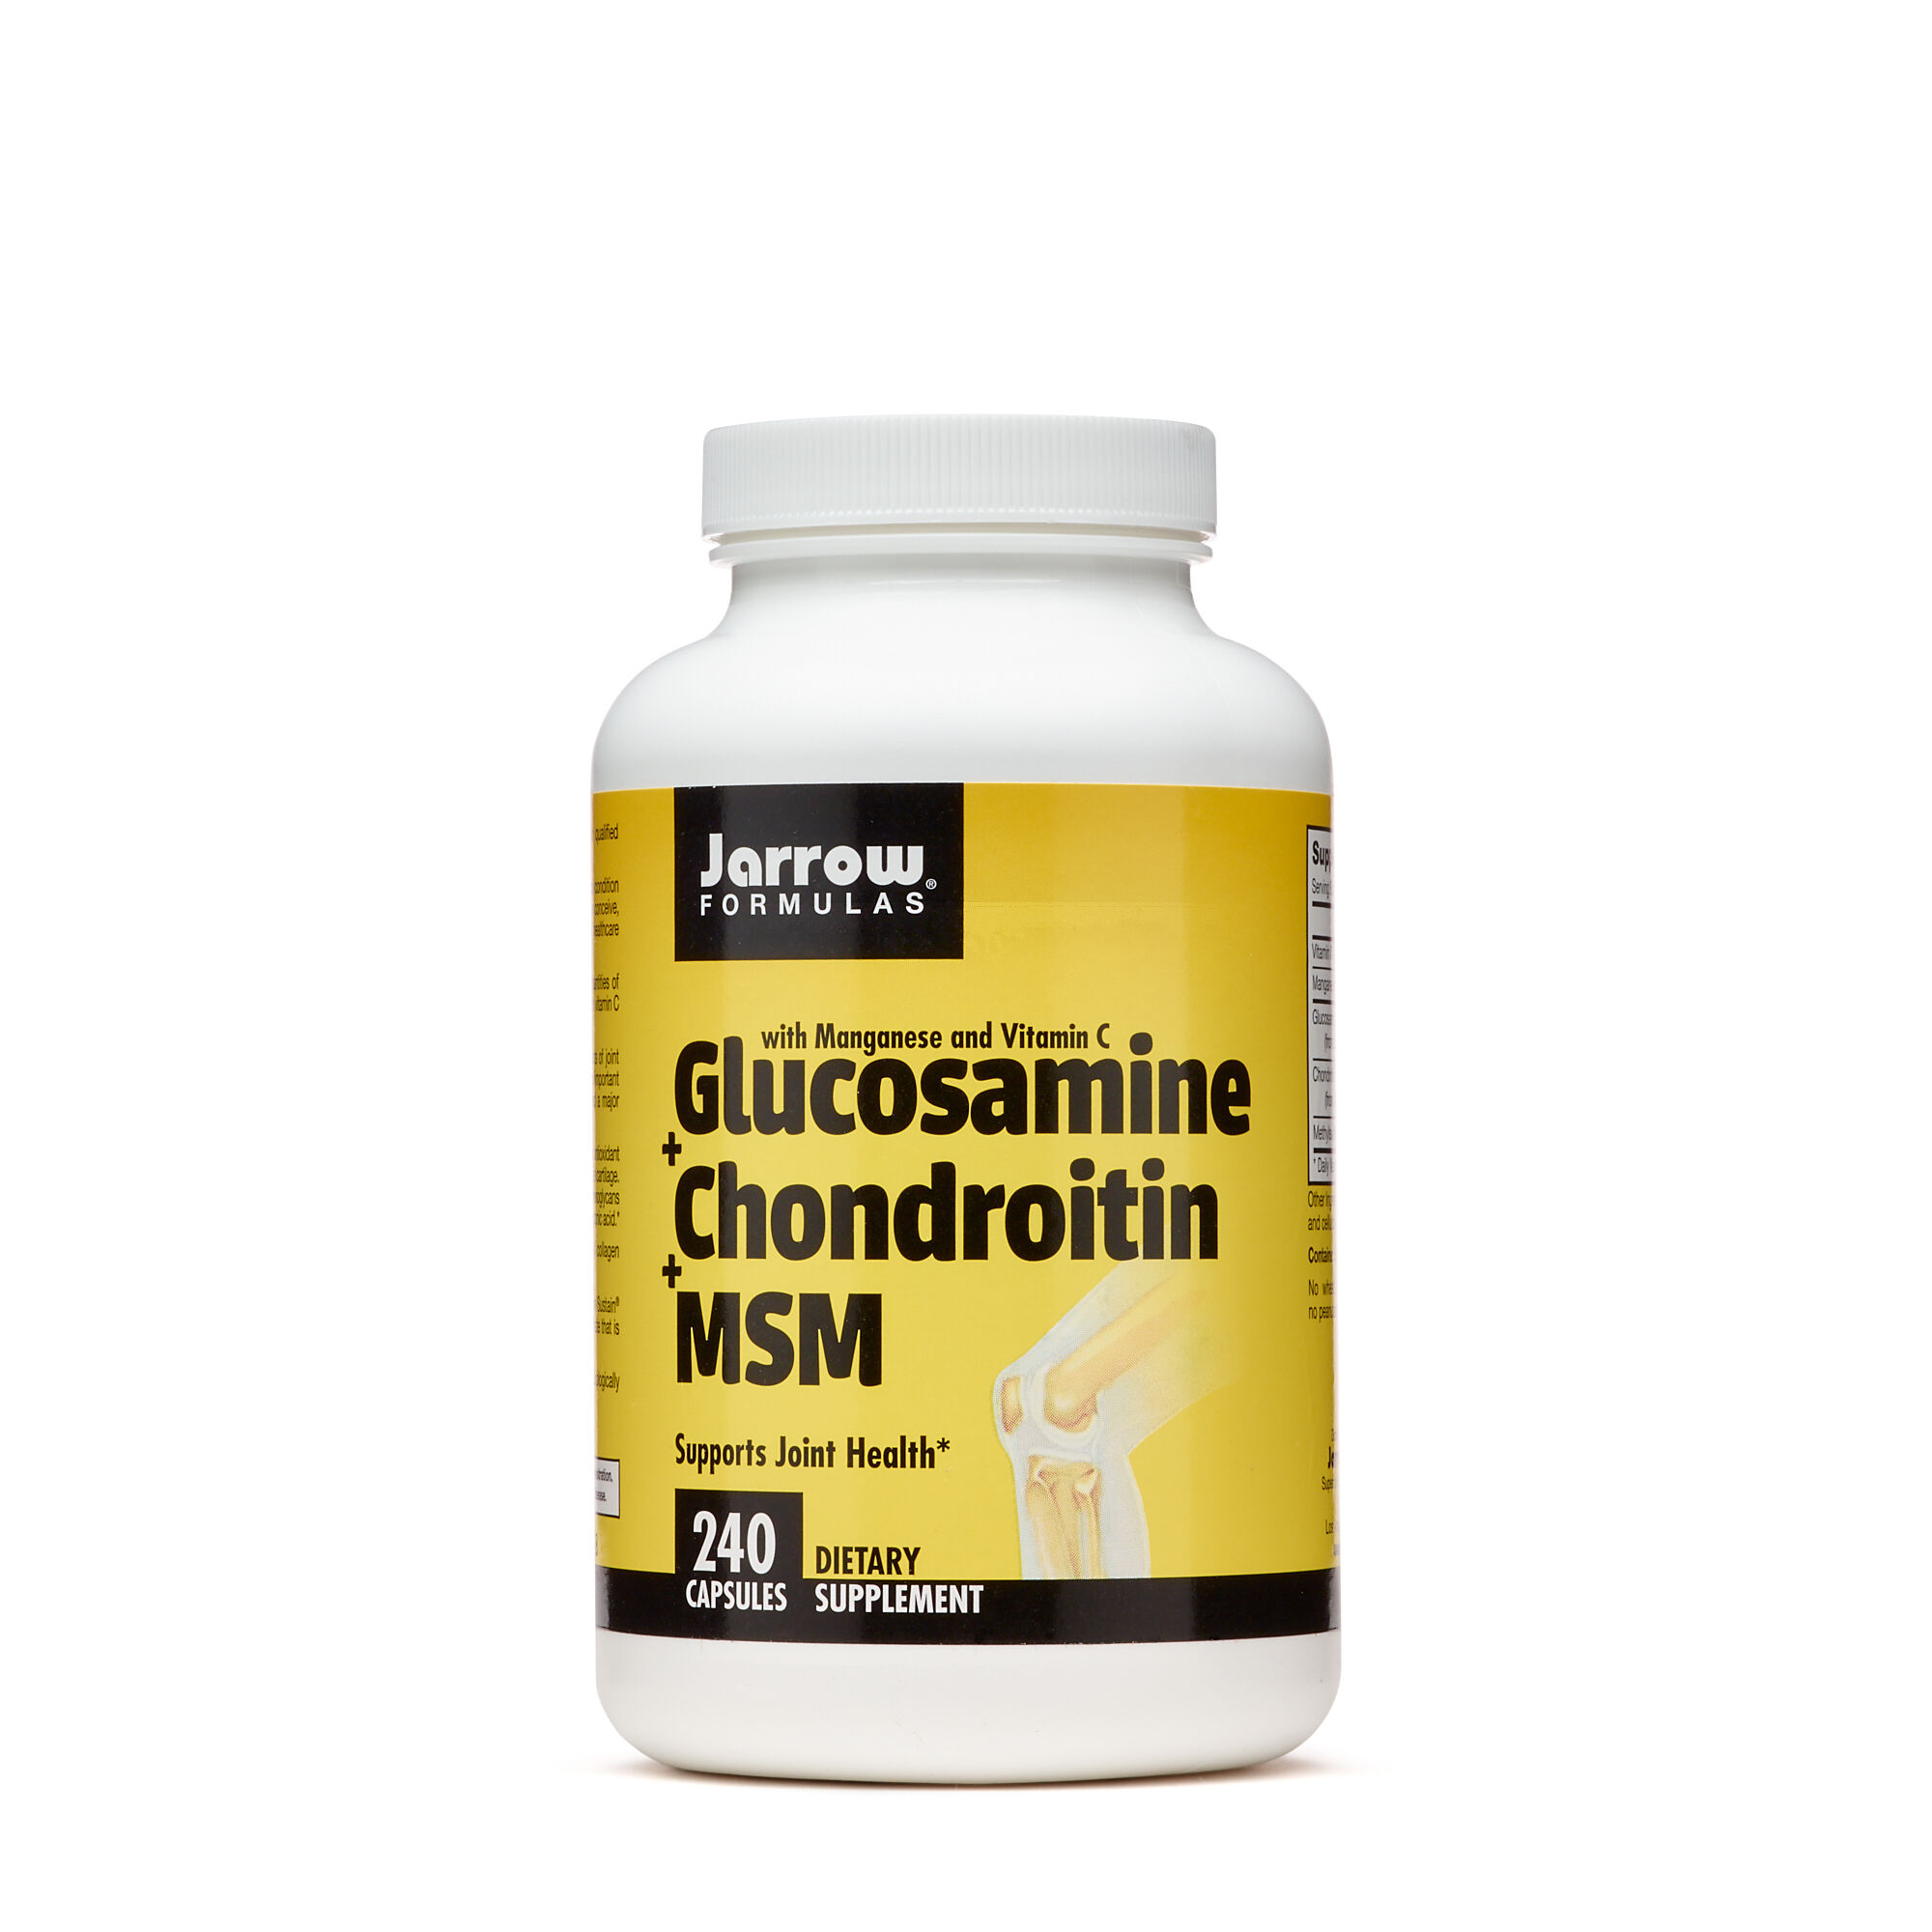 Glucosamine + Chondroitin + Msm - 240 Capsules - Jarrow Formulas - Joint Support